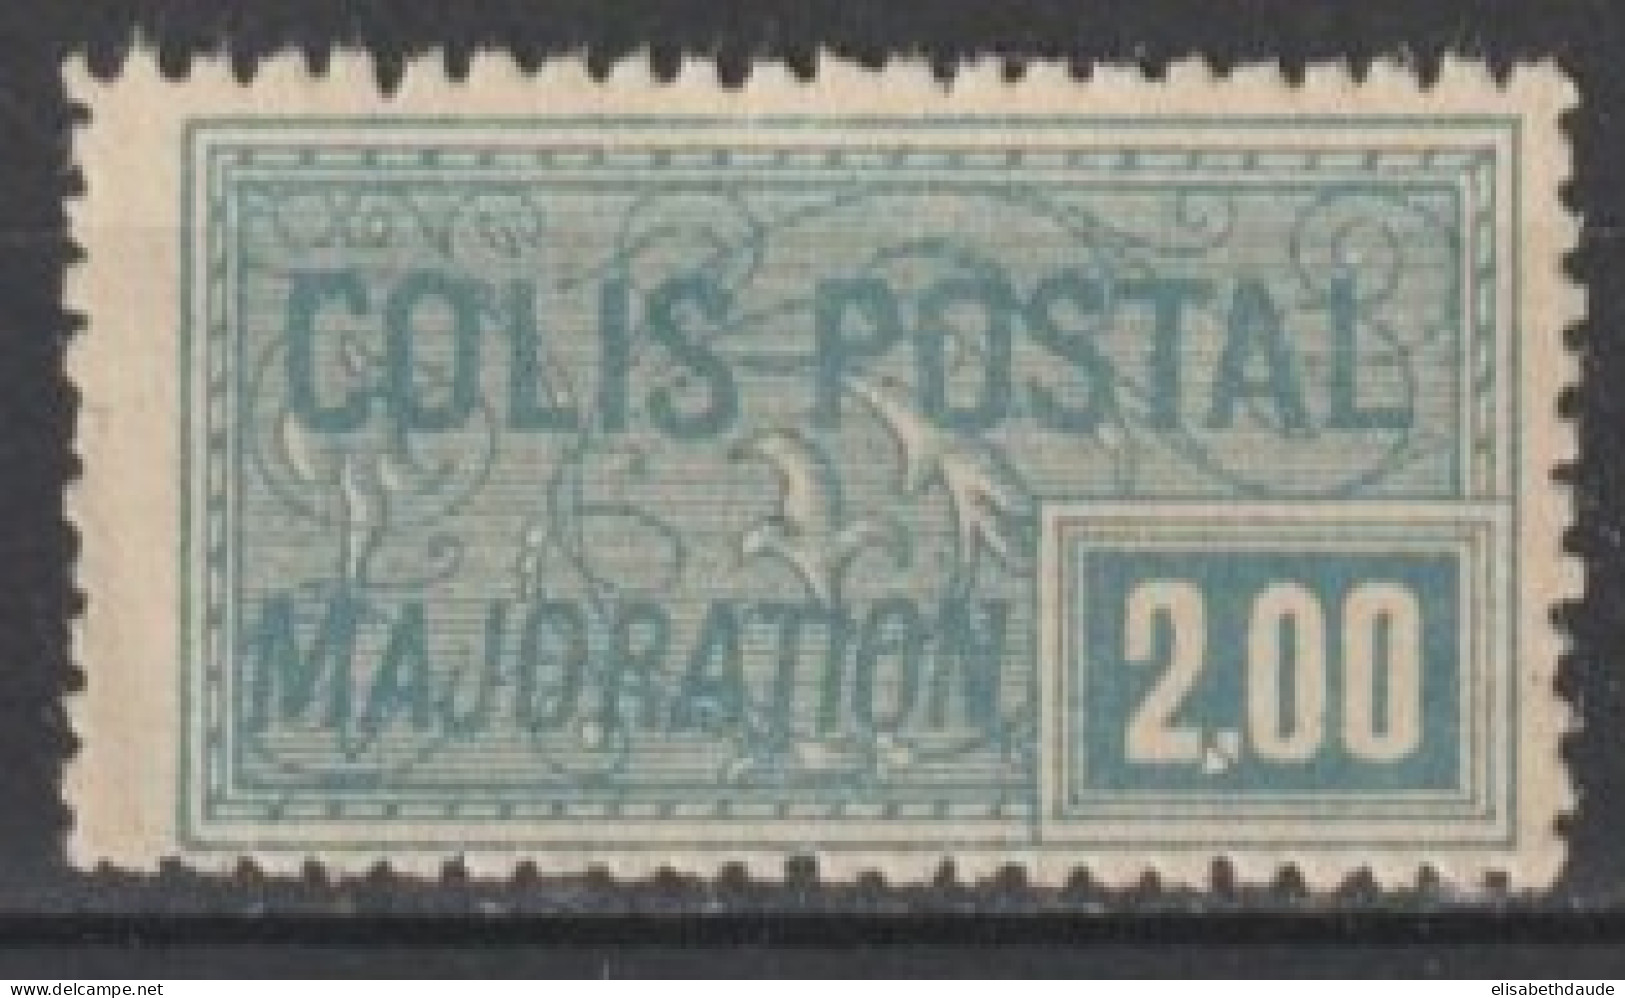 COLIS POSTAUX - 1926 - YVERT N° 79 * MLH - COTE = 35 EUR. - Ongebruikt